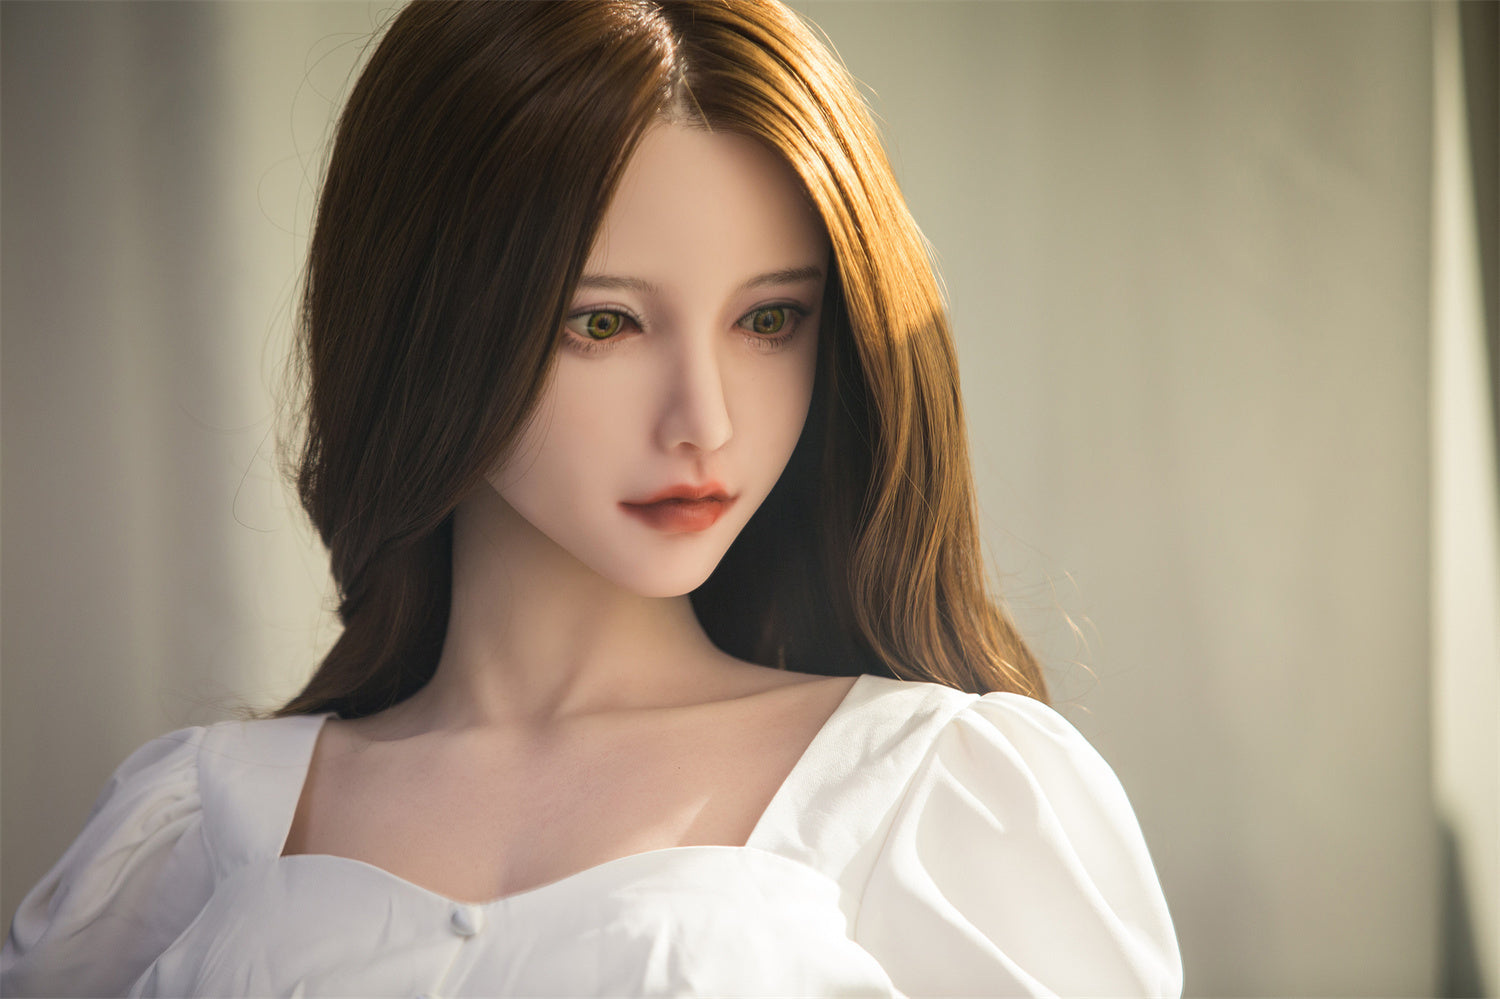 QITA Doll 162 cm Silicone - Wen Wen | Buy Sex Dolls at DOLLS ACTUALLY